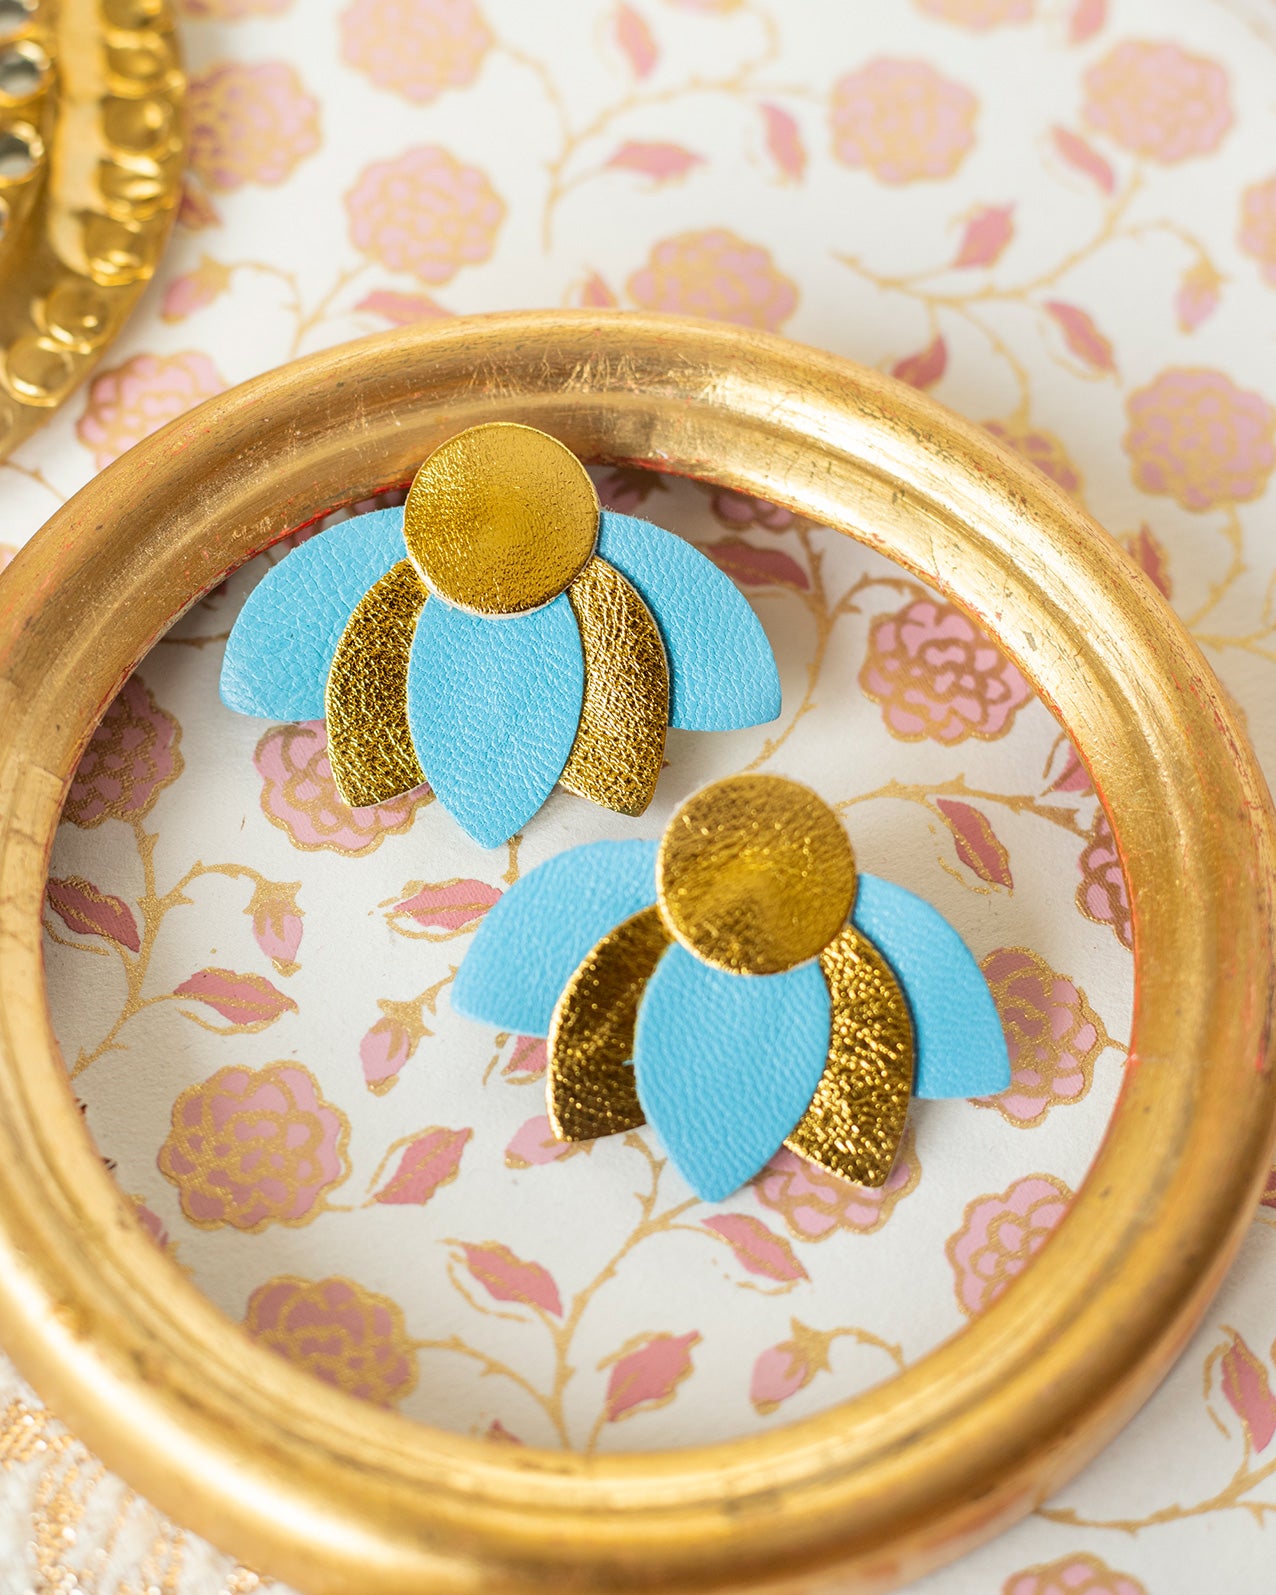 Large Lotus Flower stud earrings - celestial blue and gold